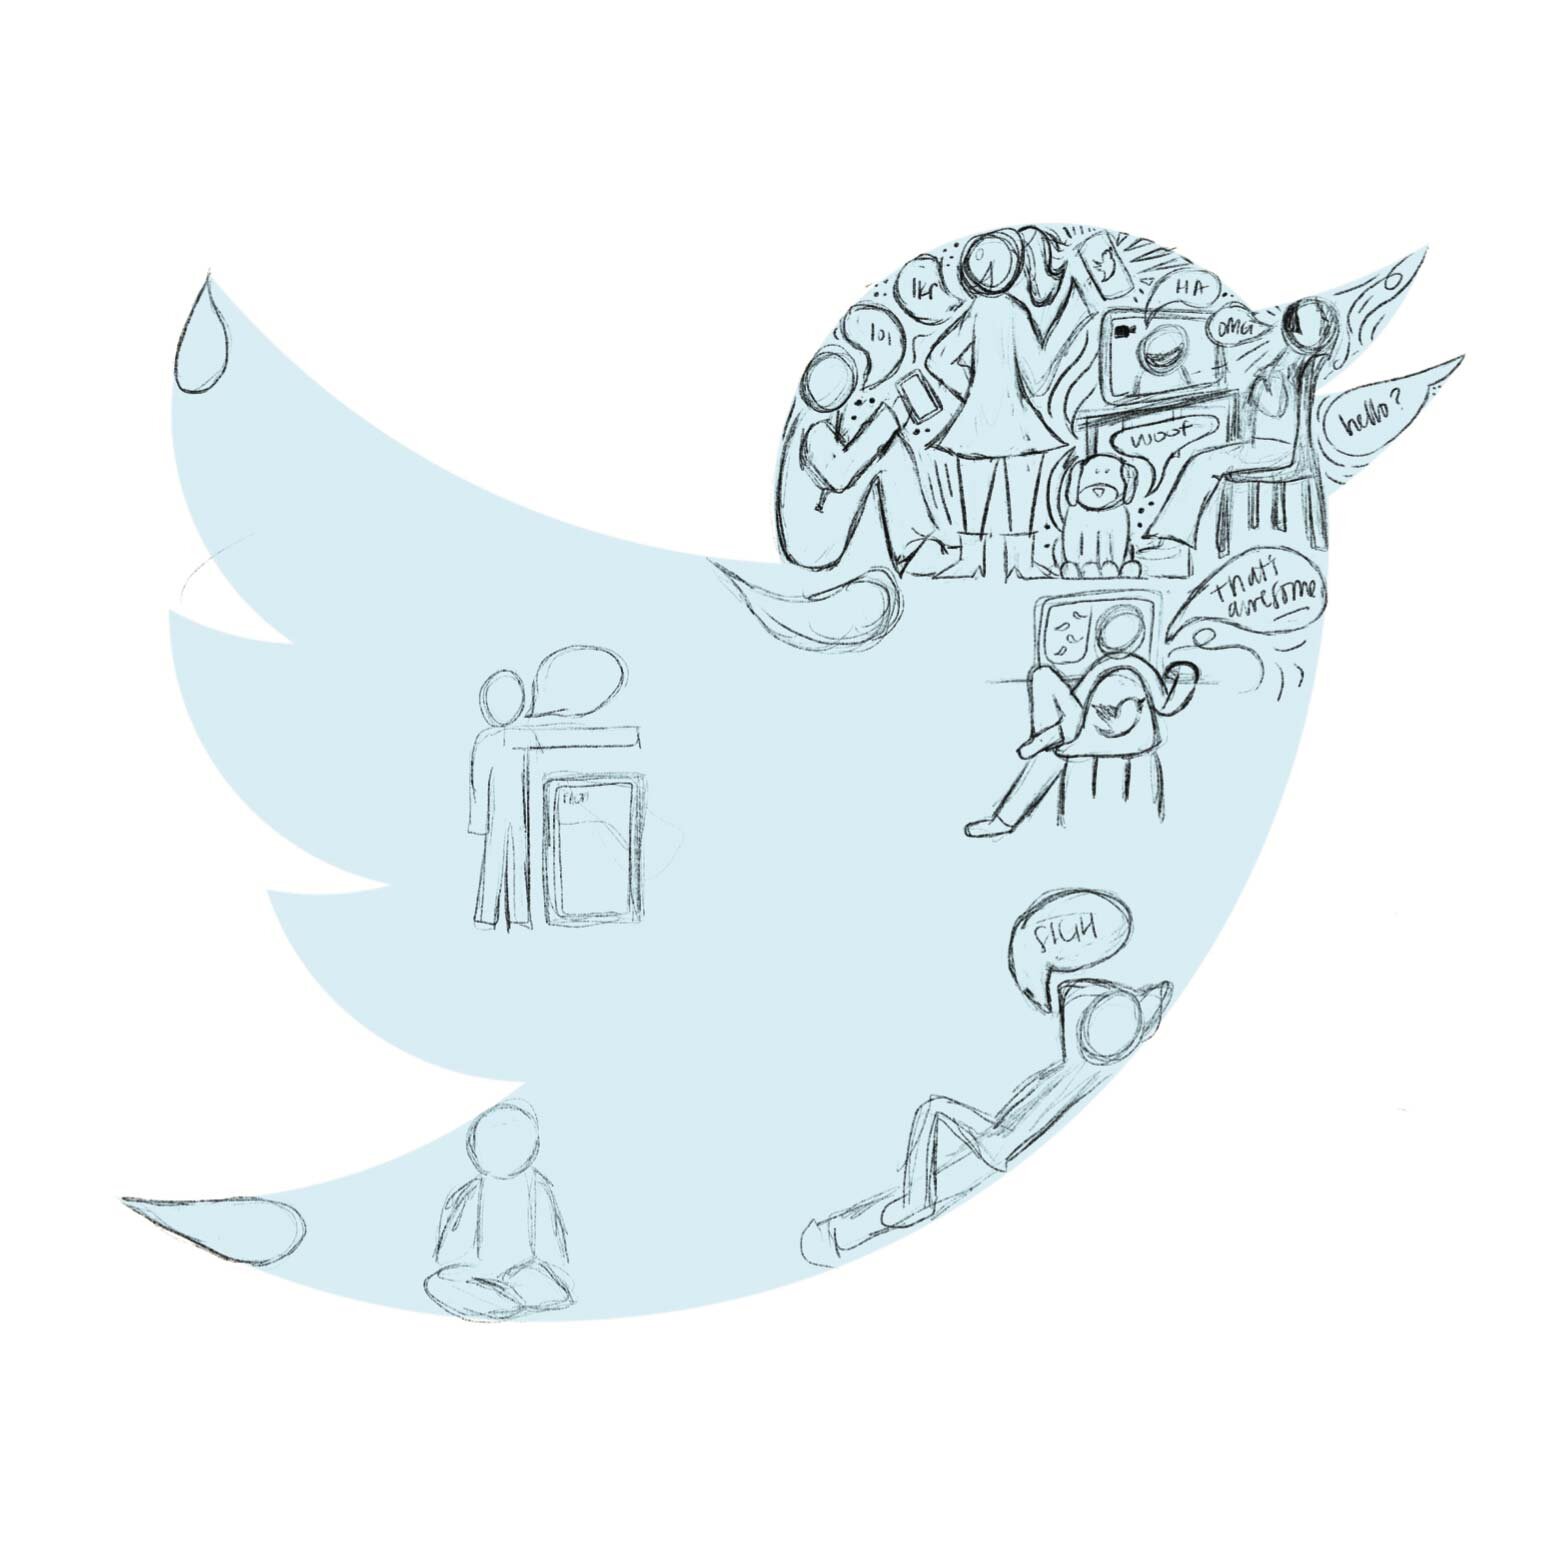 Twitter-illustration-sketch-3.jpg